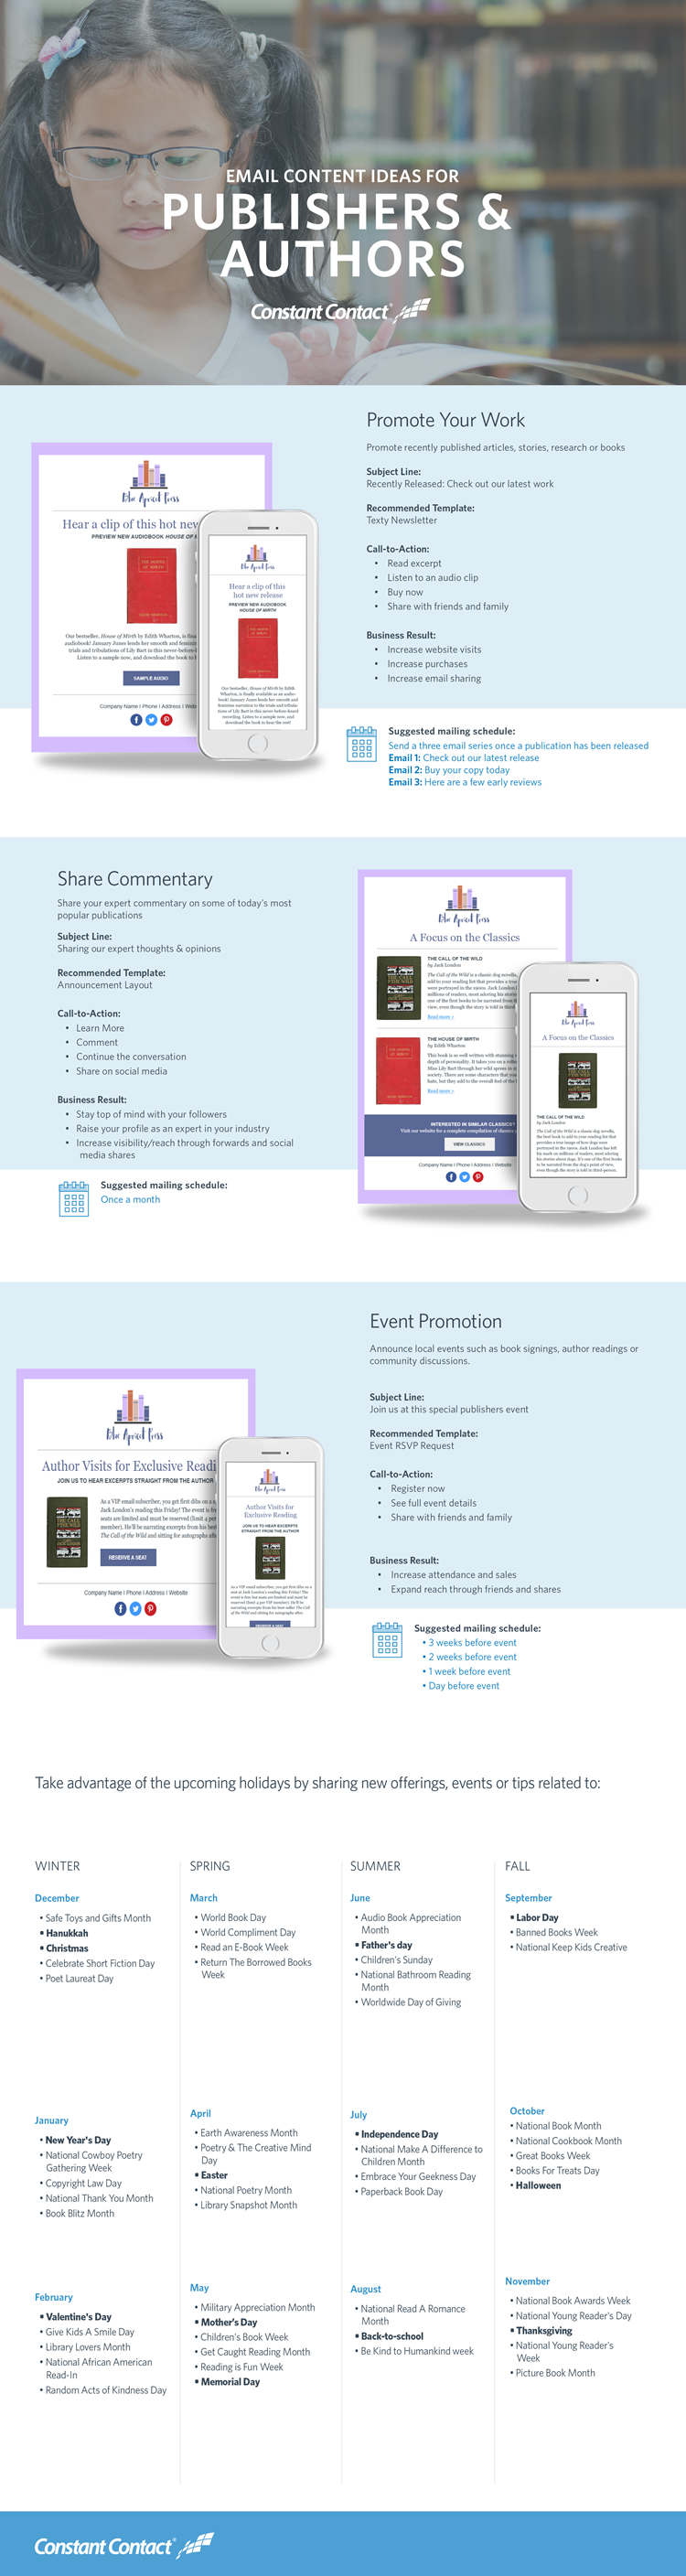 book-marketing-ideas-infographic